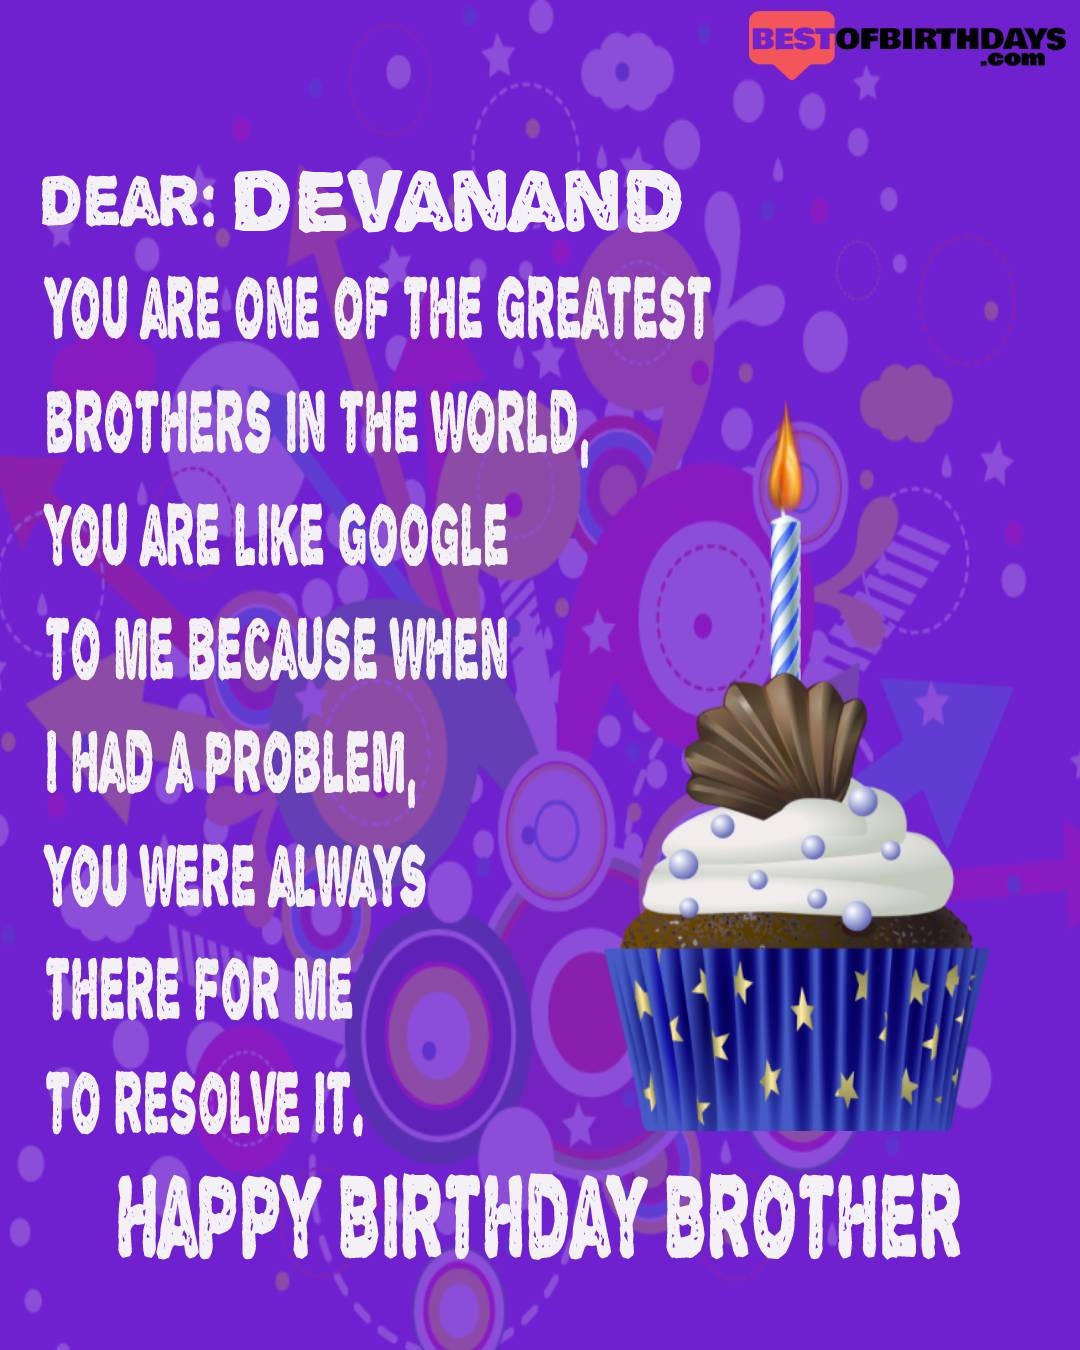 Happy birthday devanand bhai brother bro